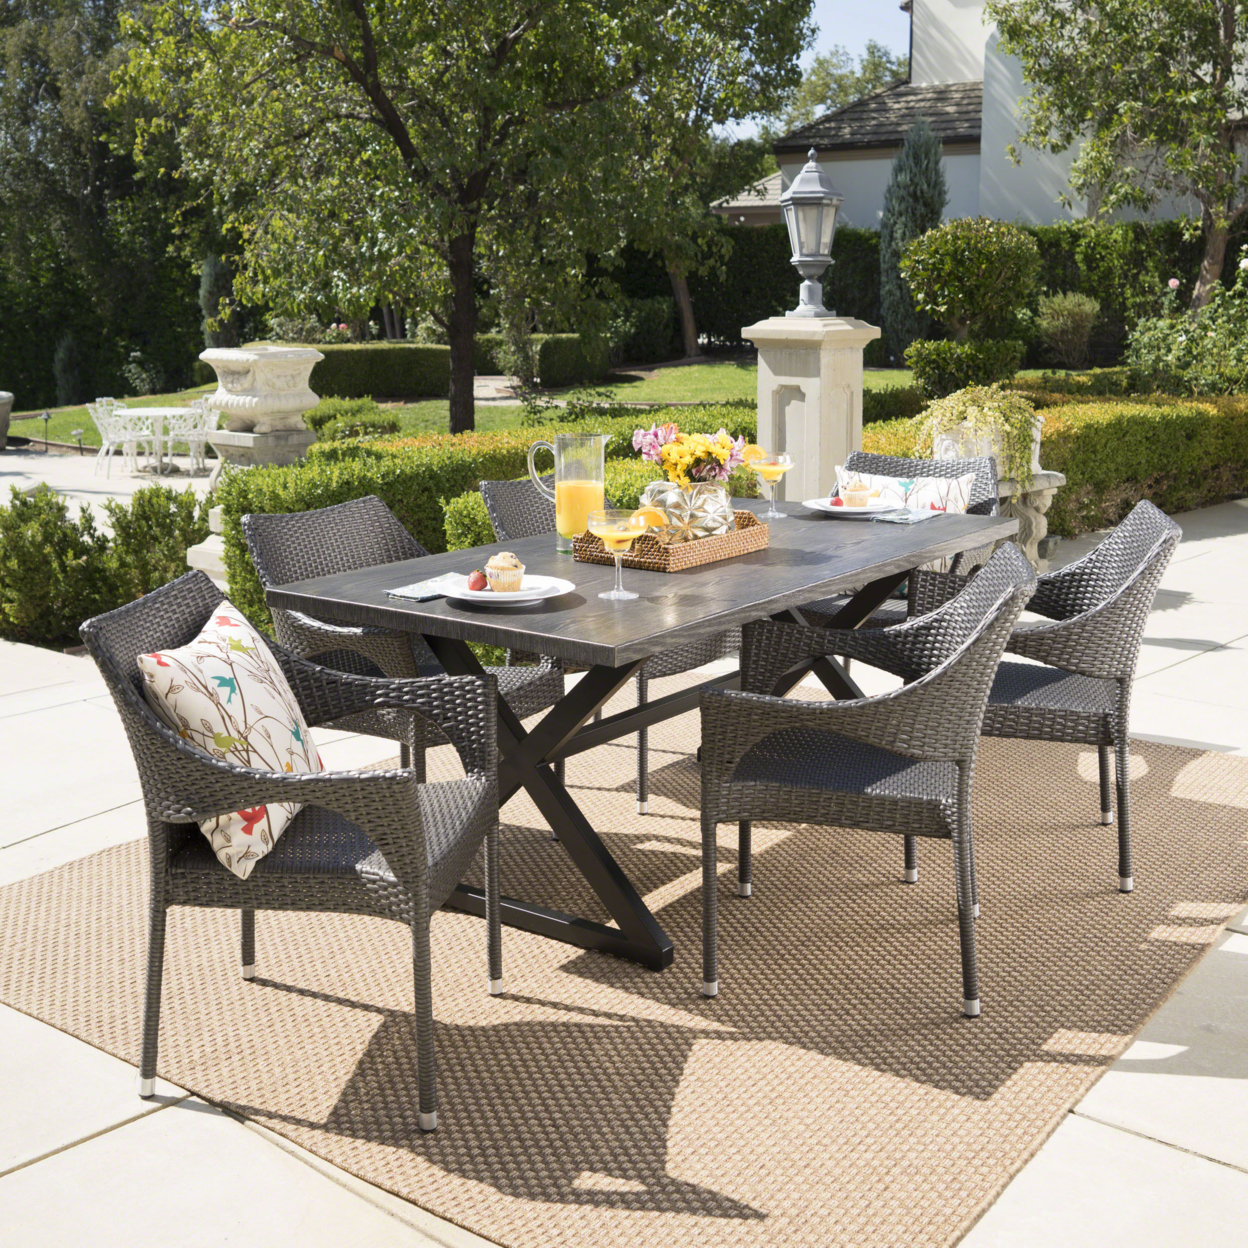 Graywood Outdoor 7 Piece Wicker Dining Set With Rectangular Aluminum Table - Gray/Black